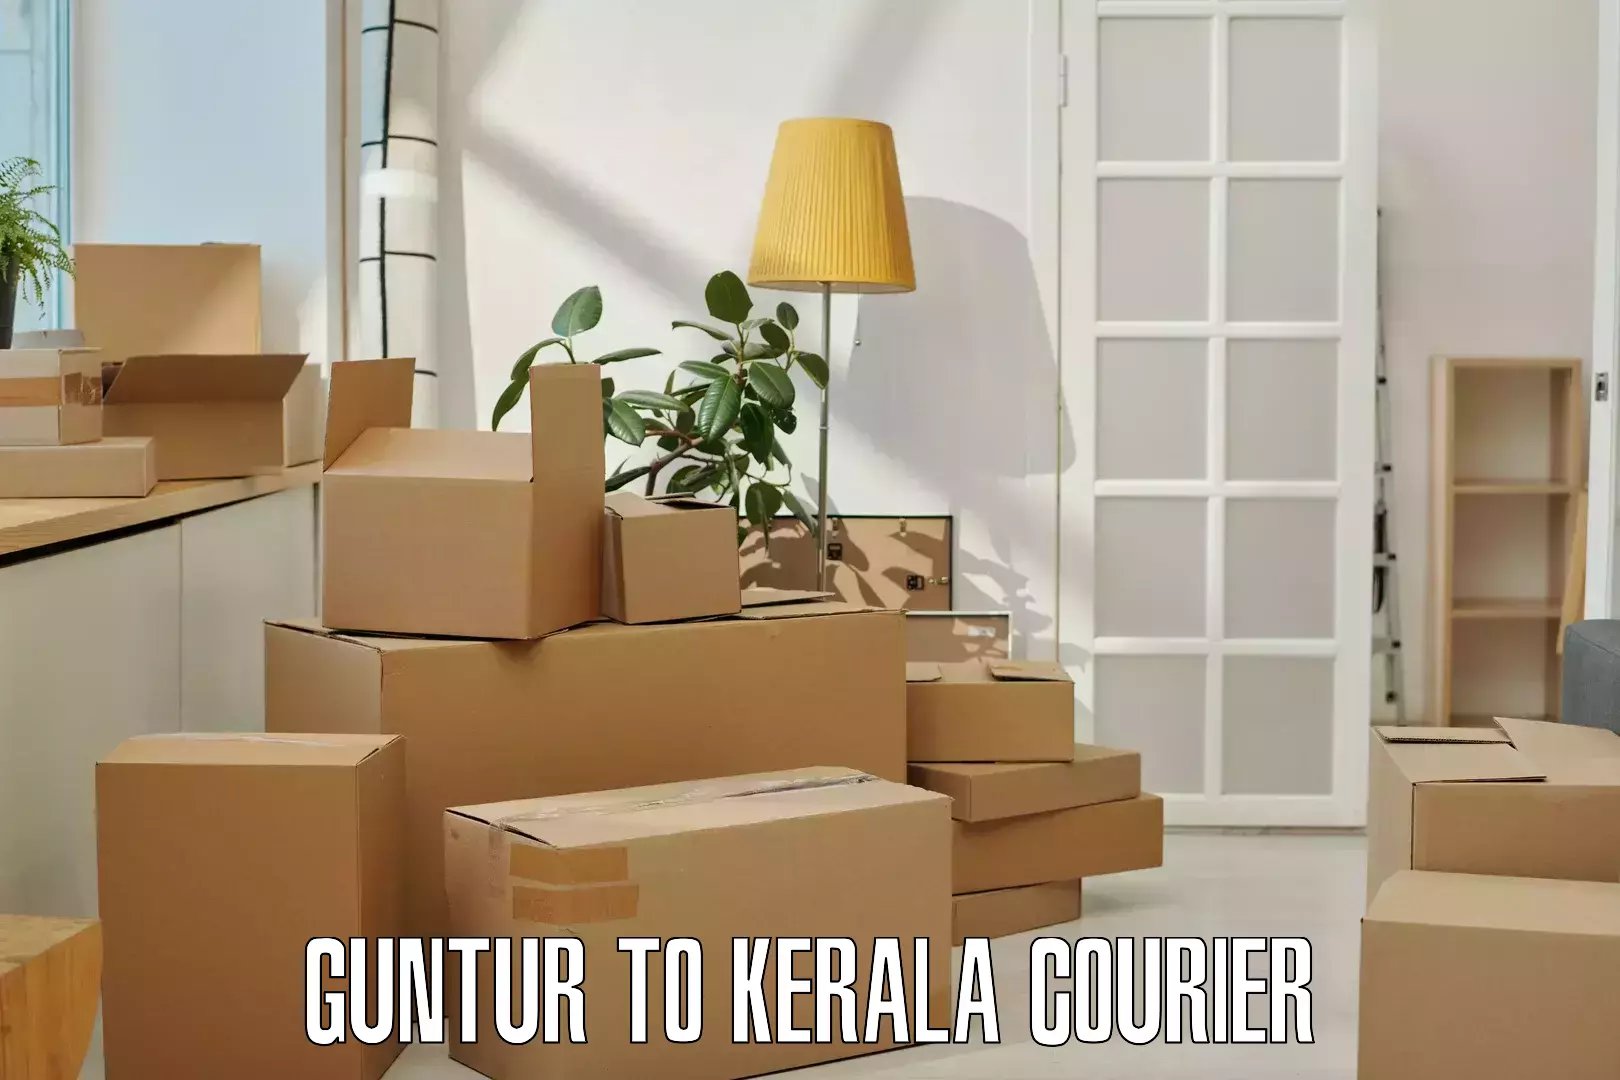 Courier service comparison Guntur to Kerala